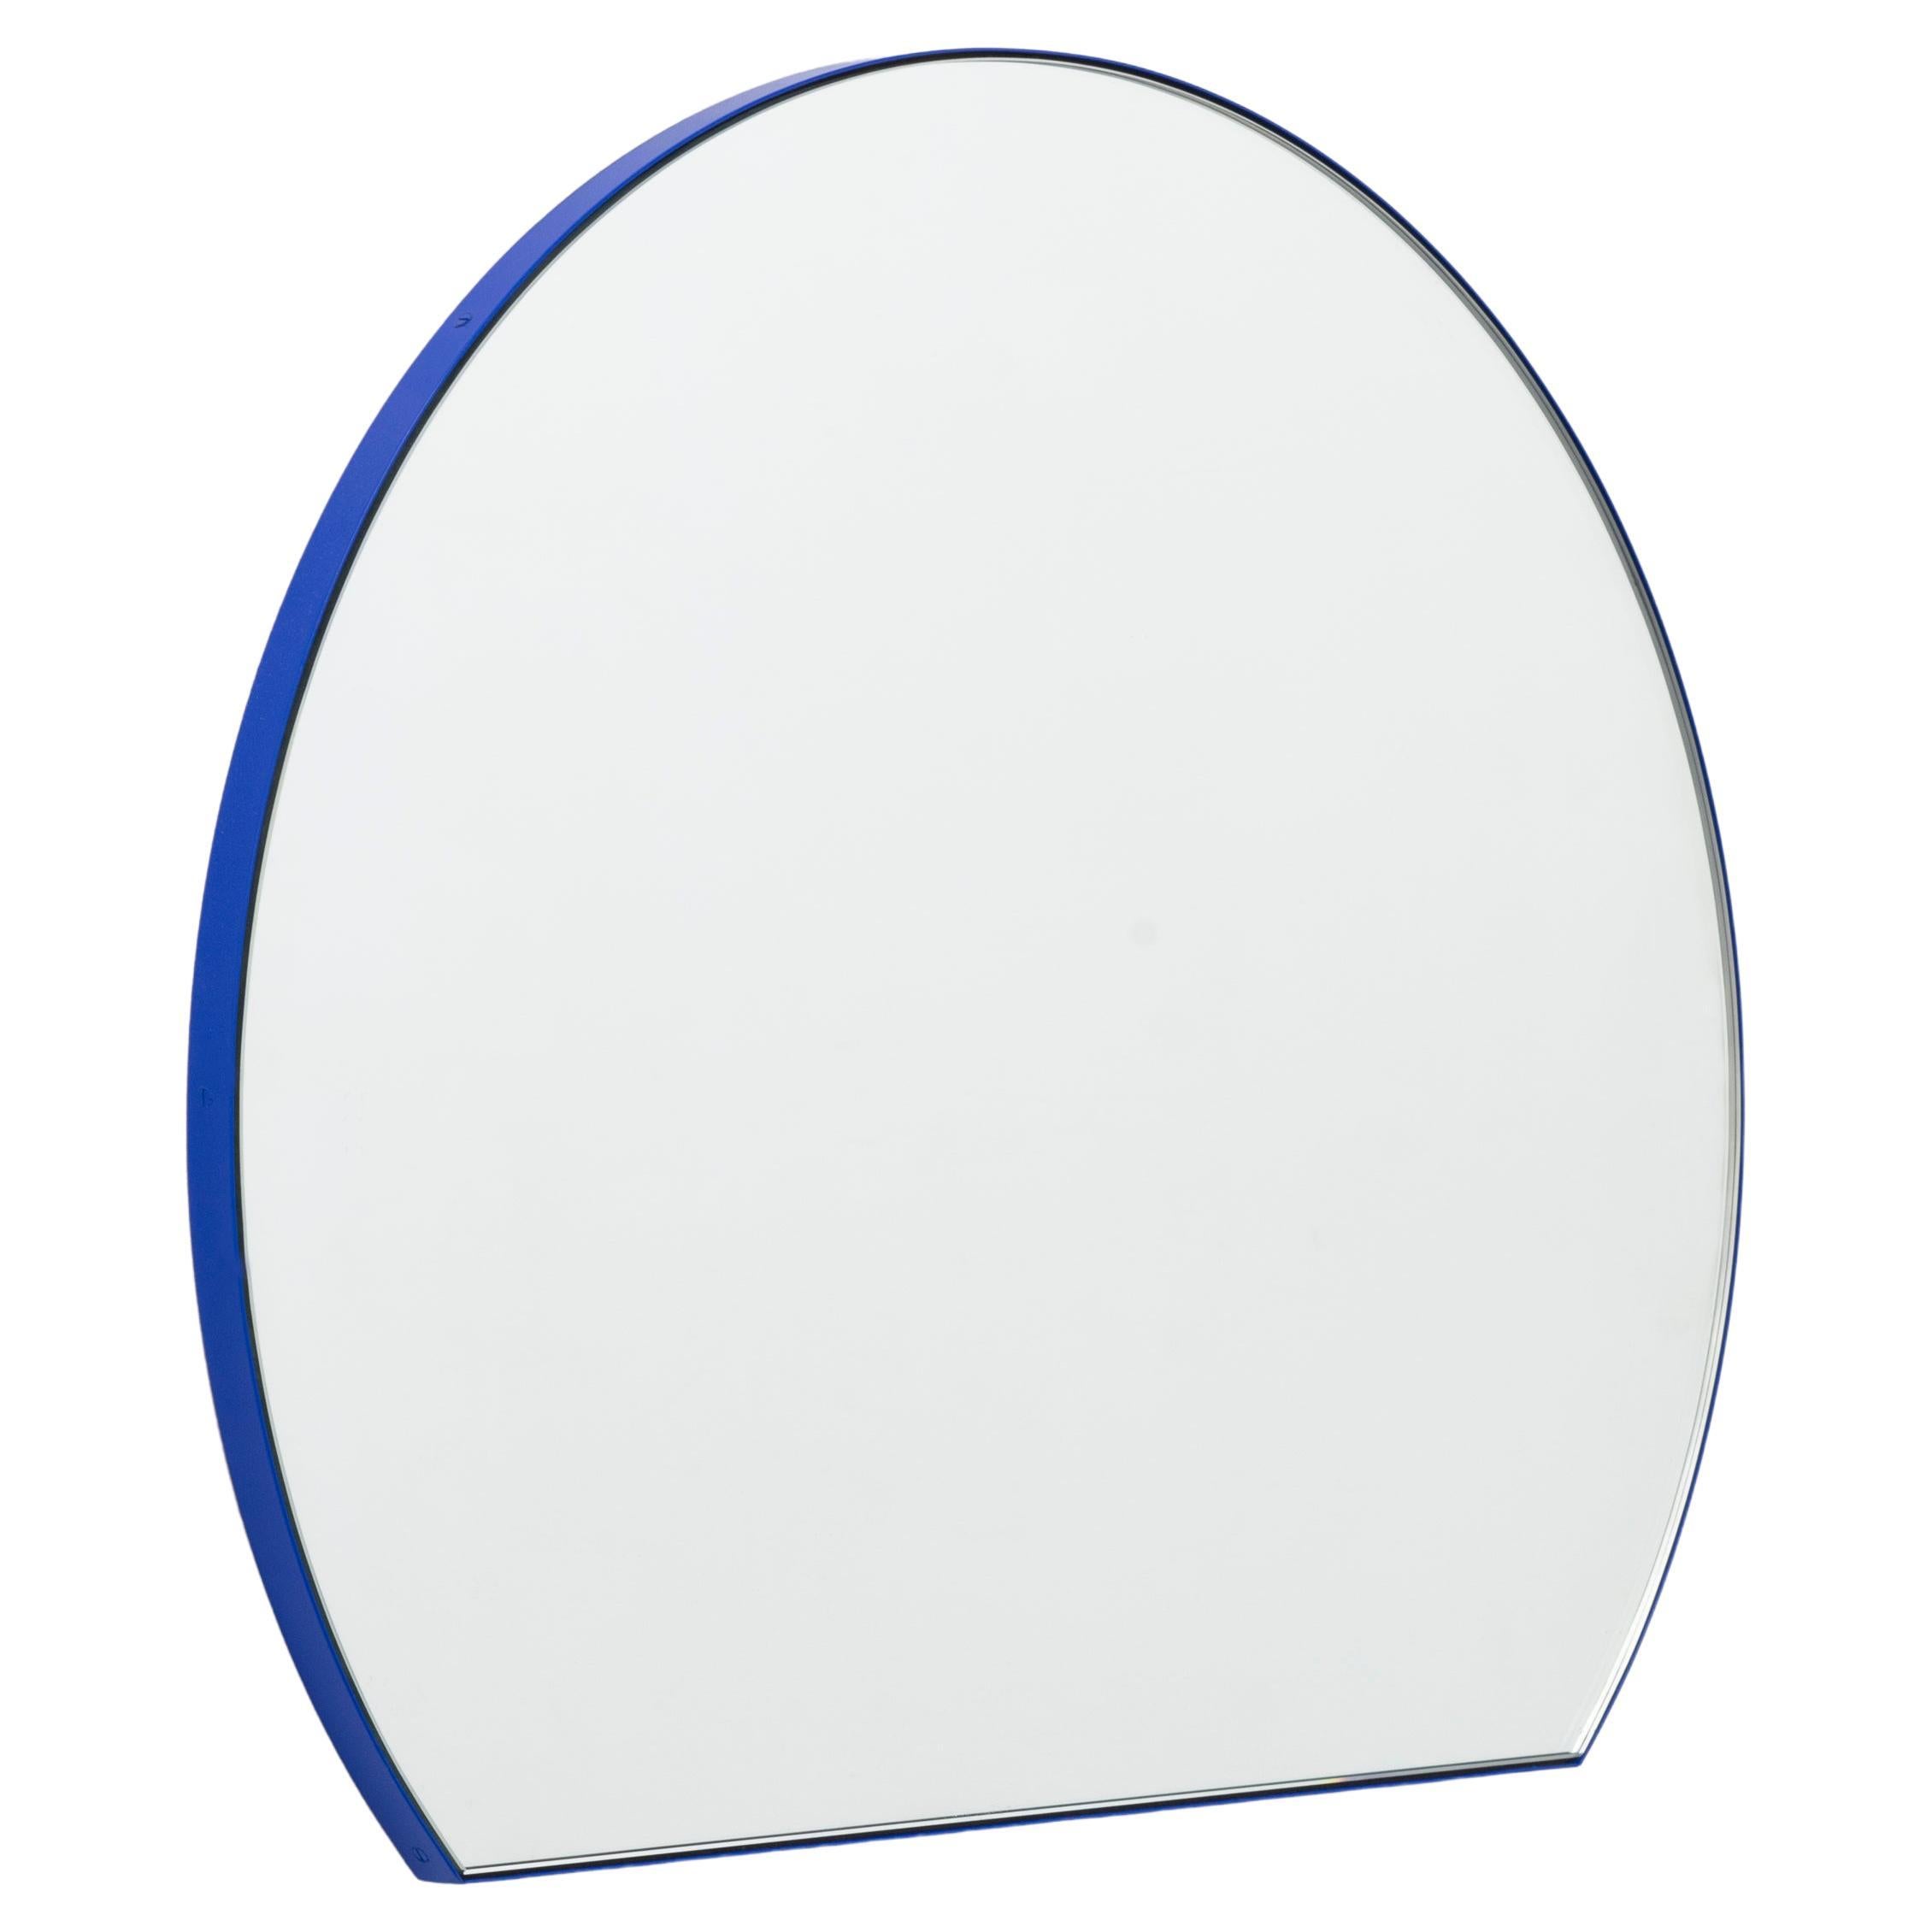 Orbis Trecus Cropped Circular Modern Mirror with Blue Frame, Regular For Sale